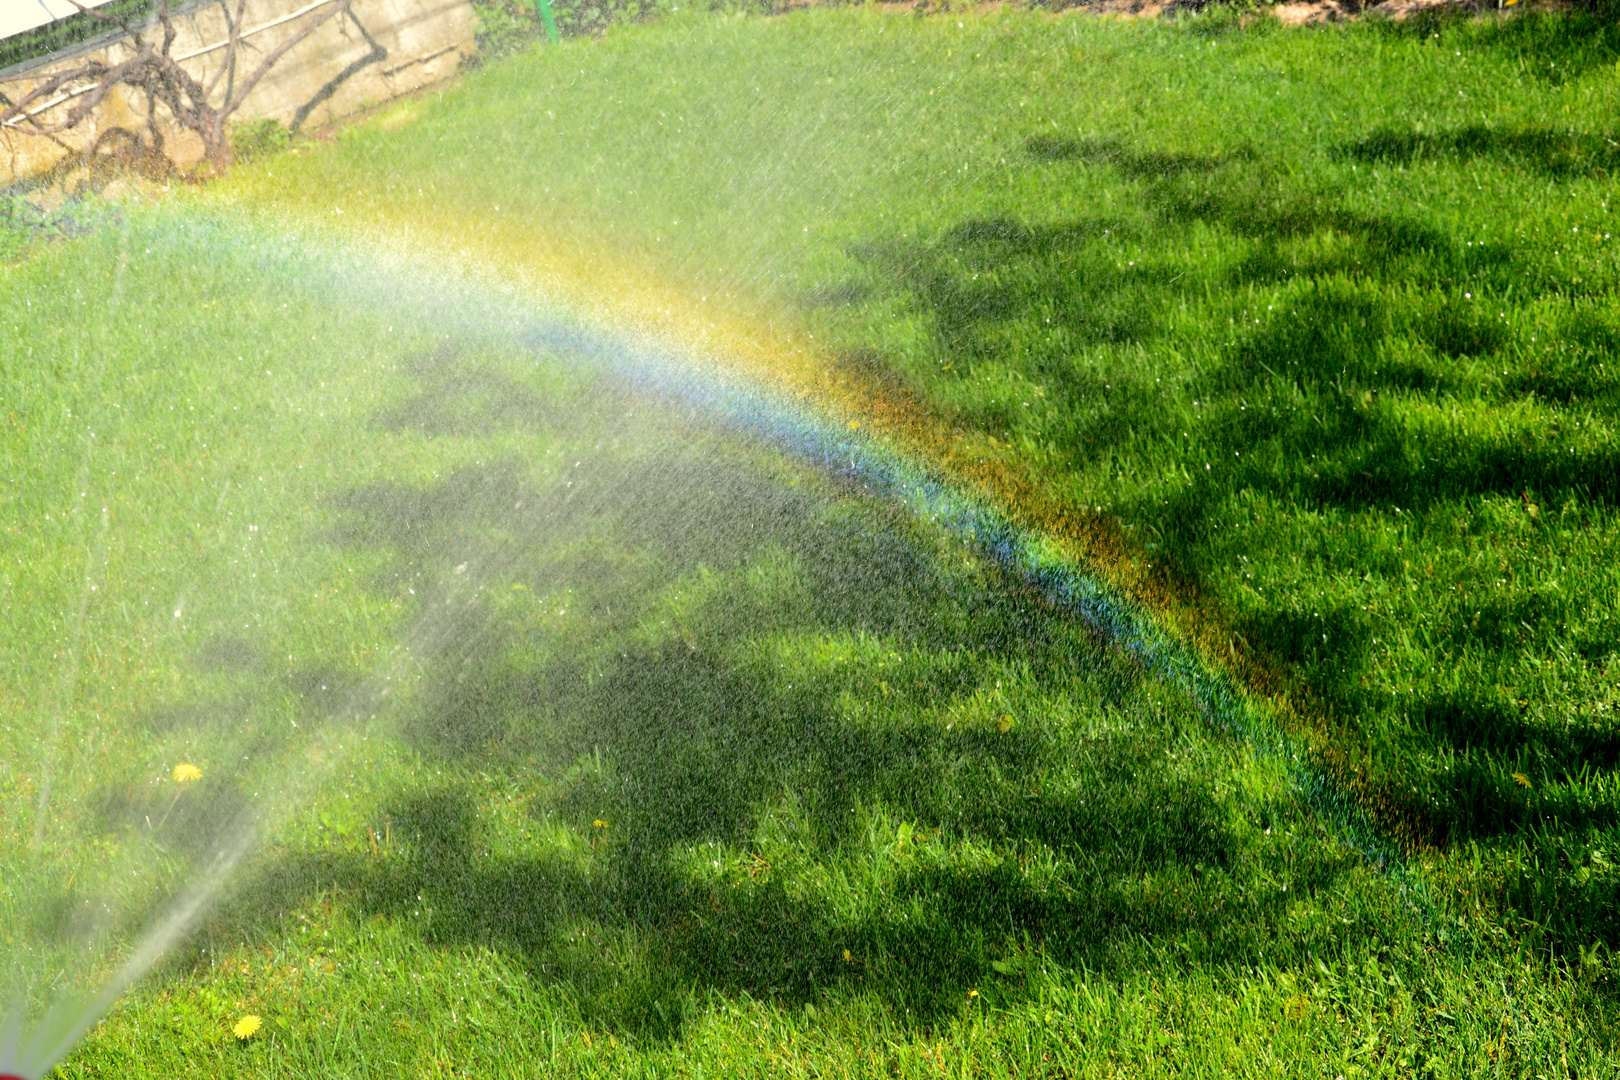 A home-made rainbow